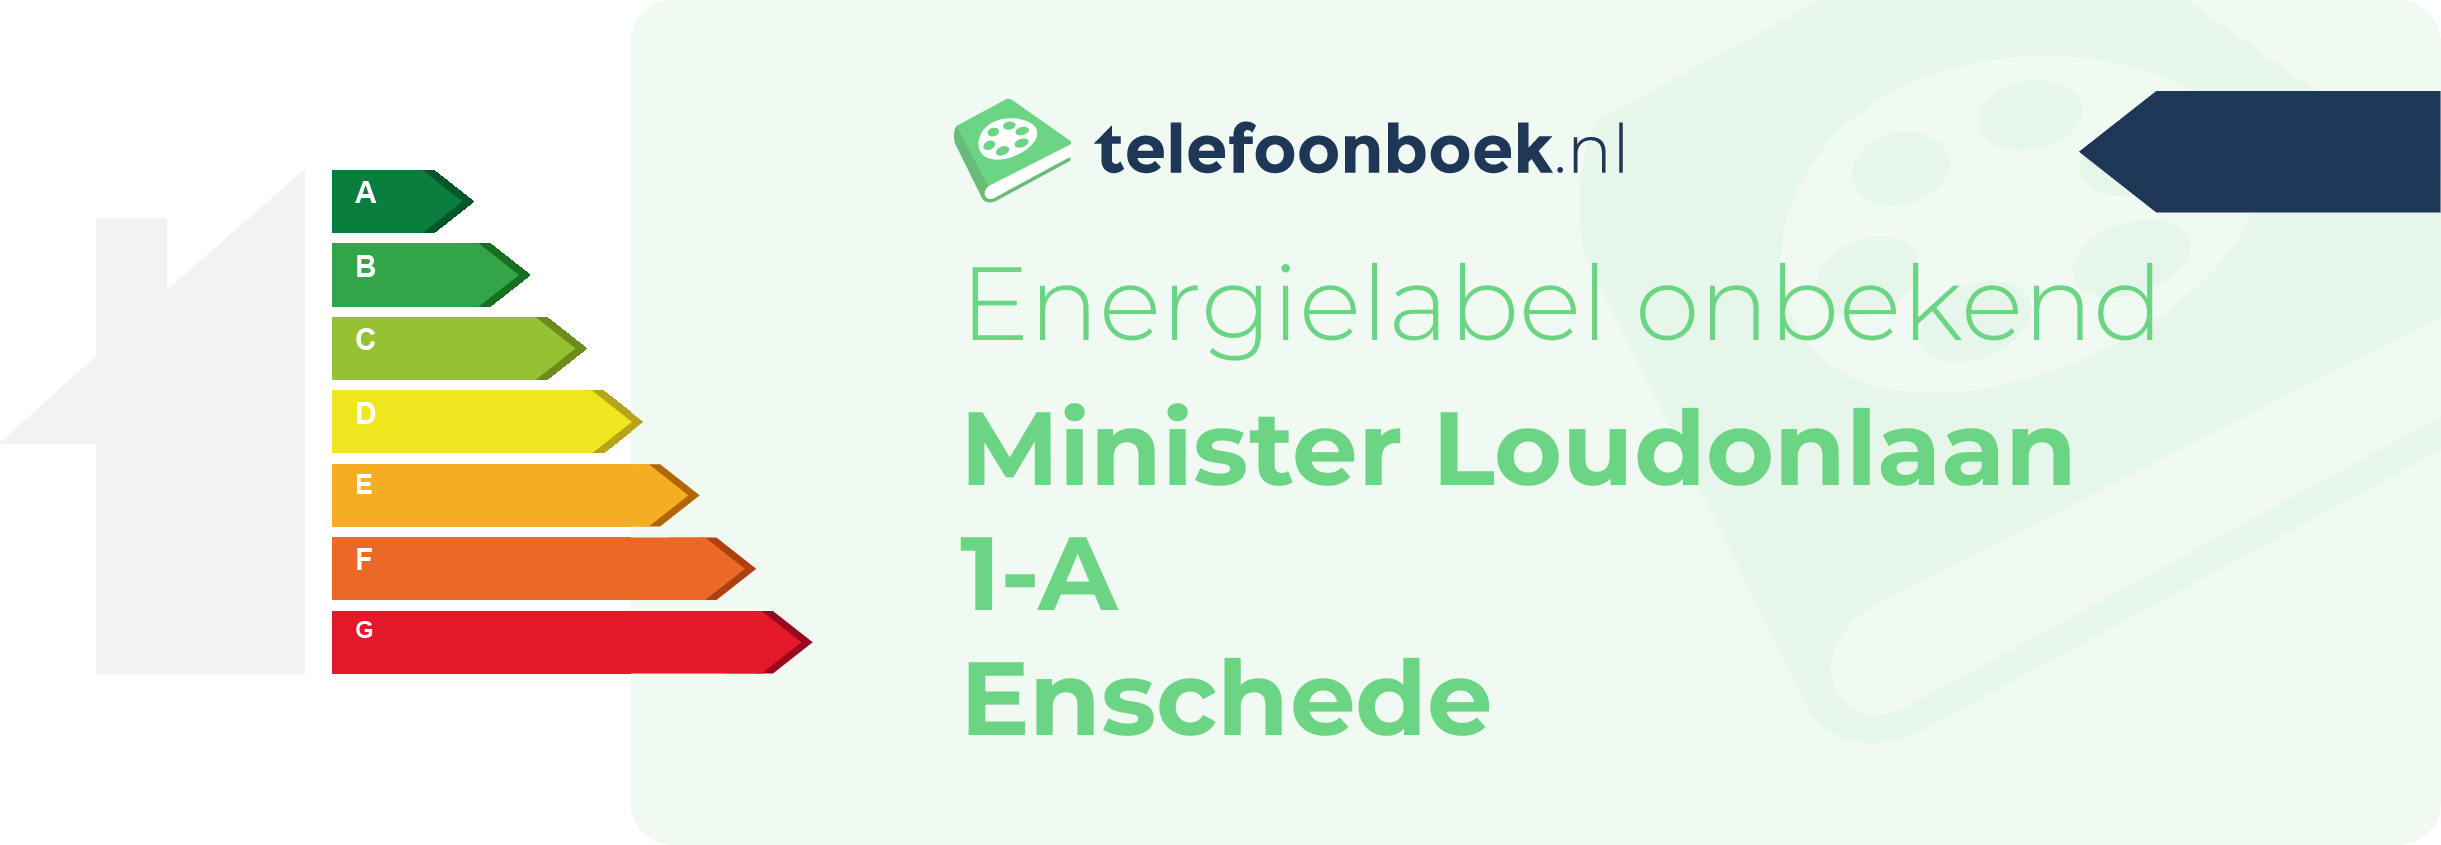 Energielabel Minister Loudonlaan 1-A Enschede